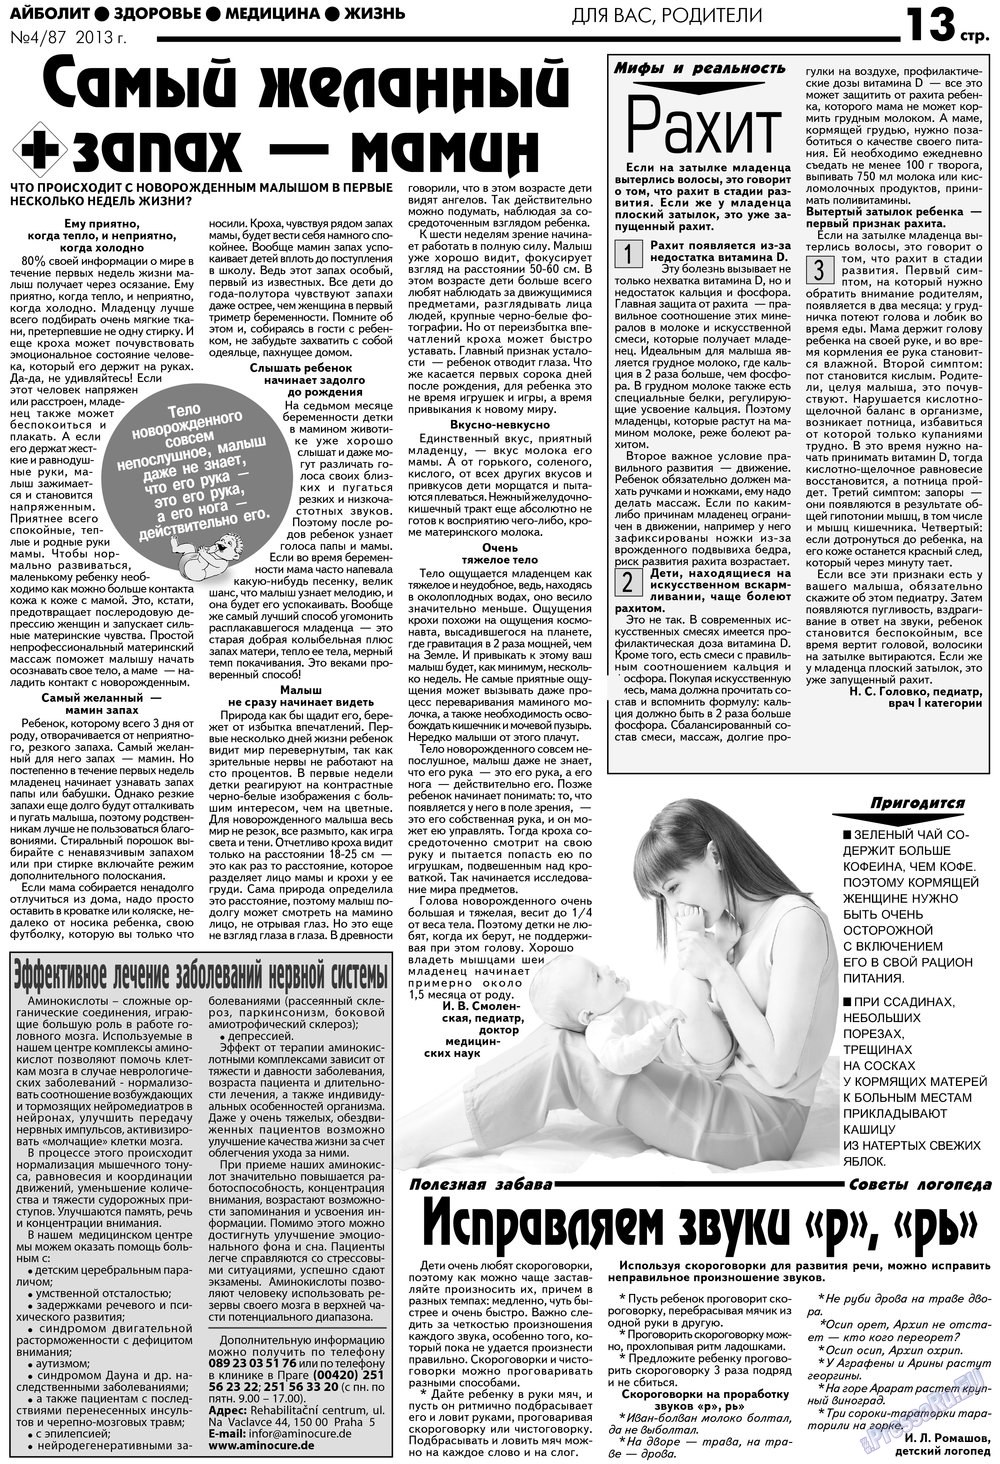 АйБолит (газета). 2013 год, номер 4, стр. 13